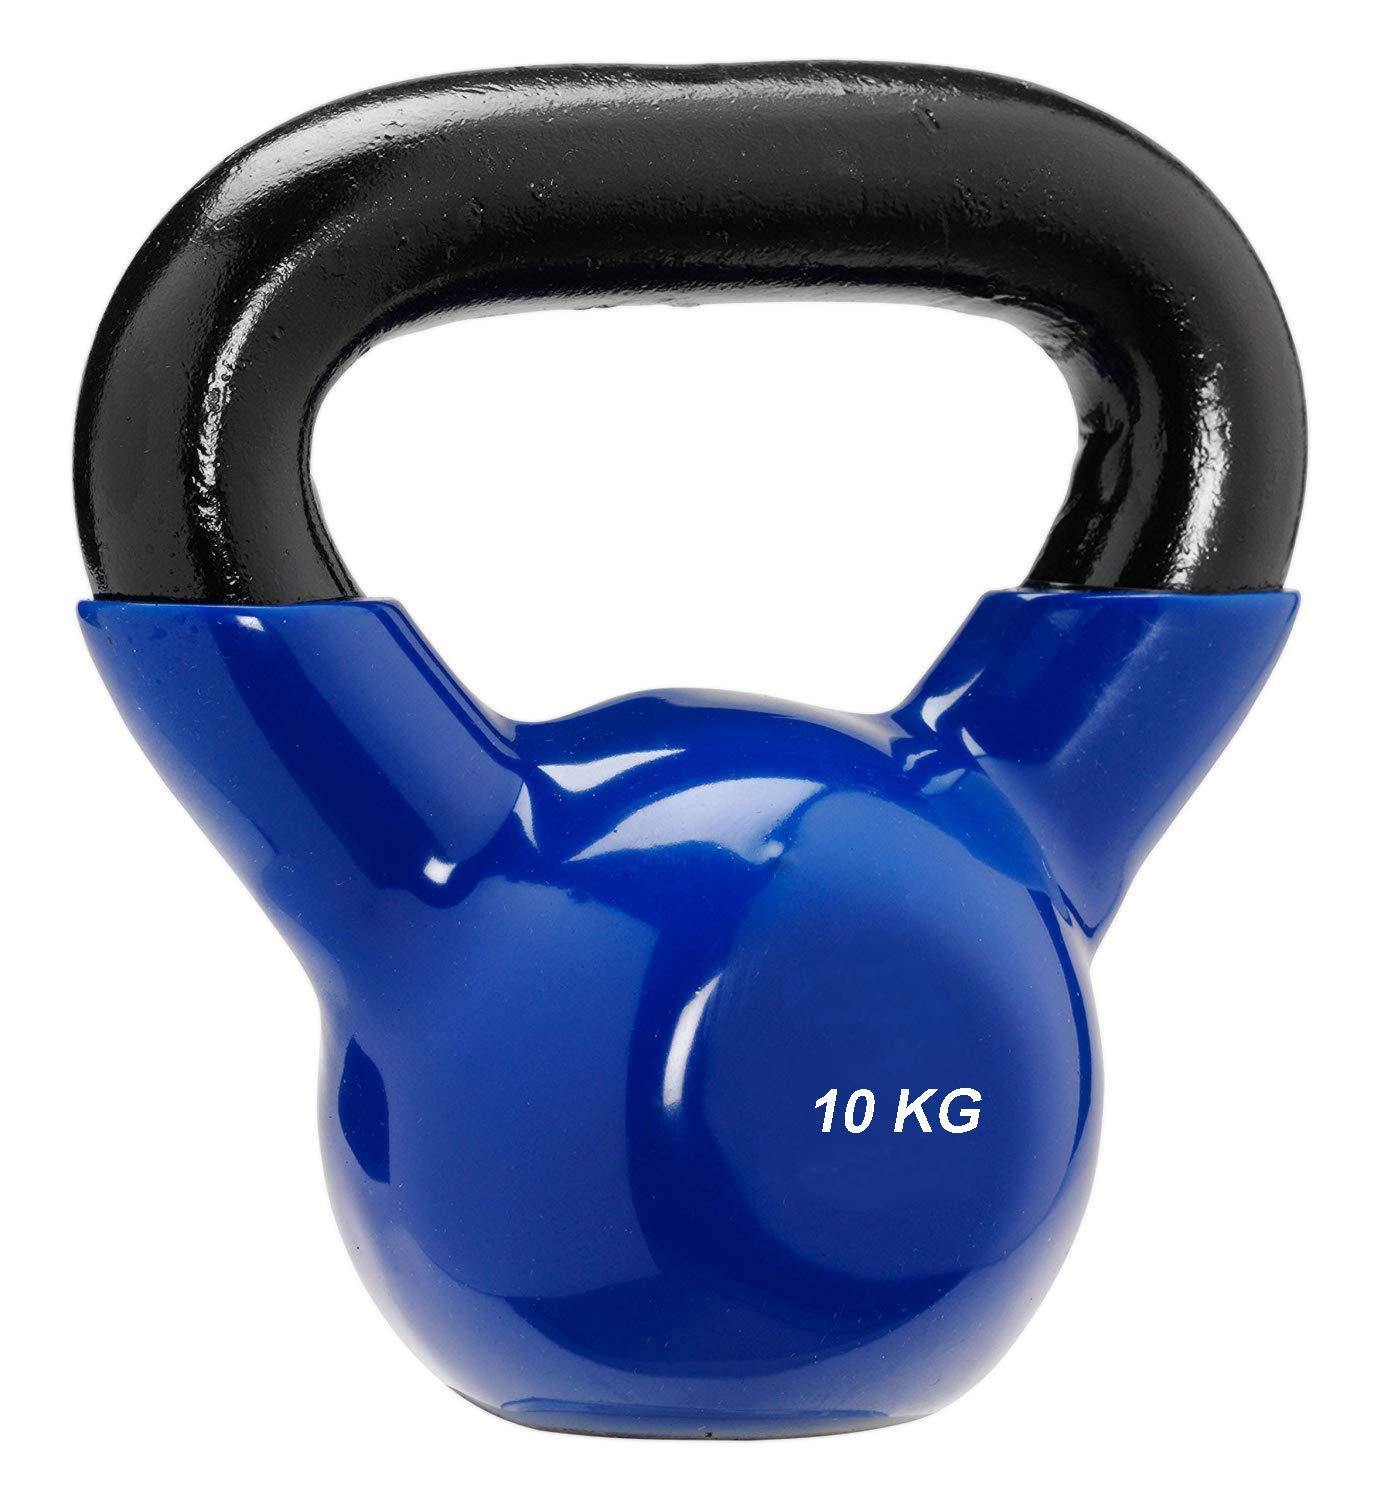 Prokick Vinyl Half Coating Kettle Bell for Gym & Workout - Navy Blue - Best Price online Prokicksports.com